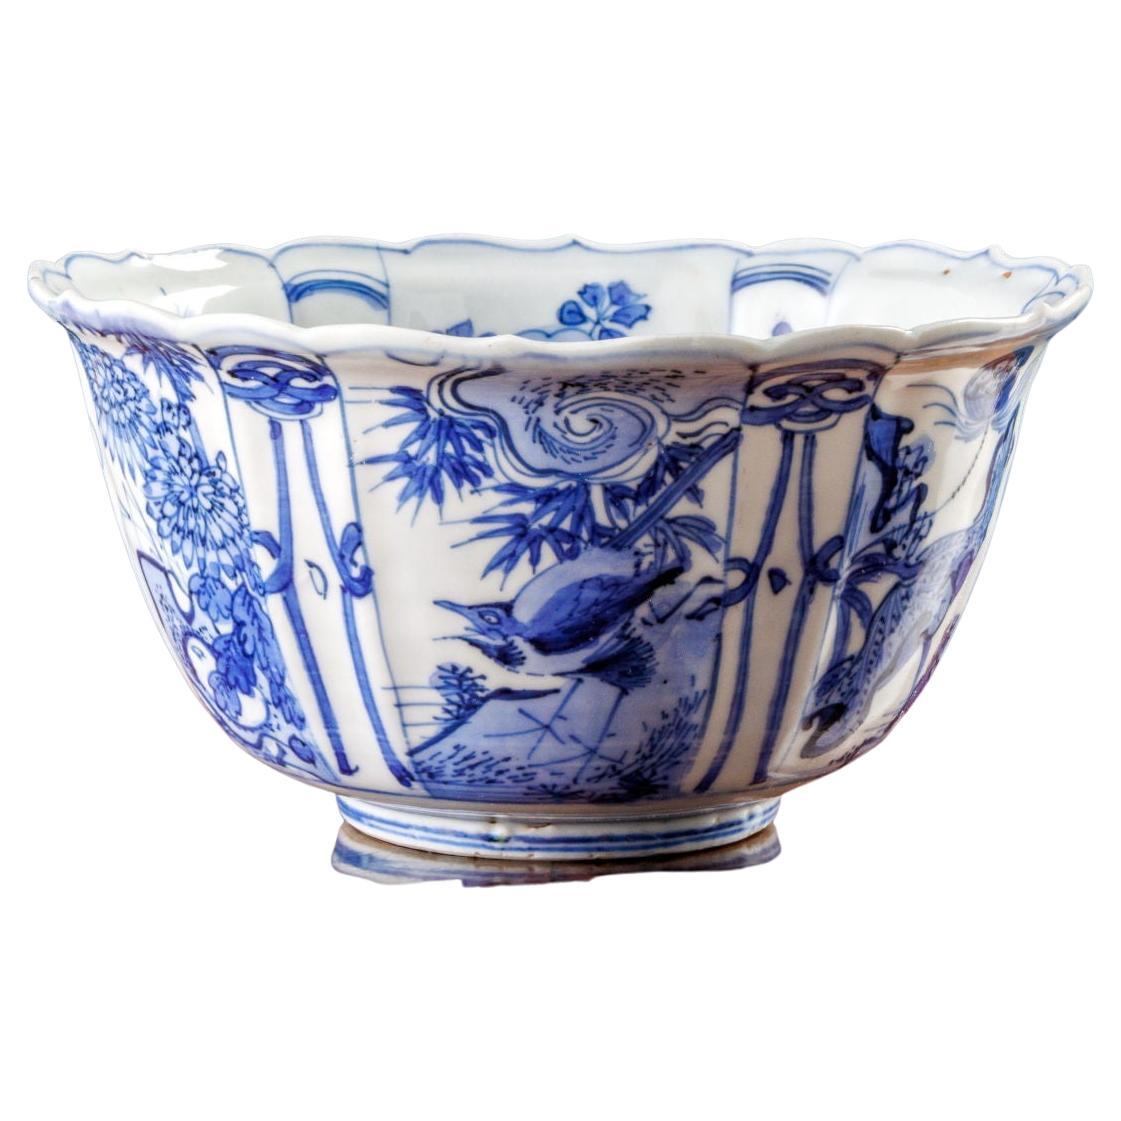 Bol en porcelaine Kraak, Chine, période Ming, période Wanli 1573-1619